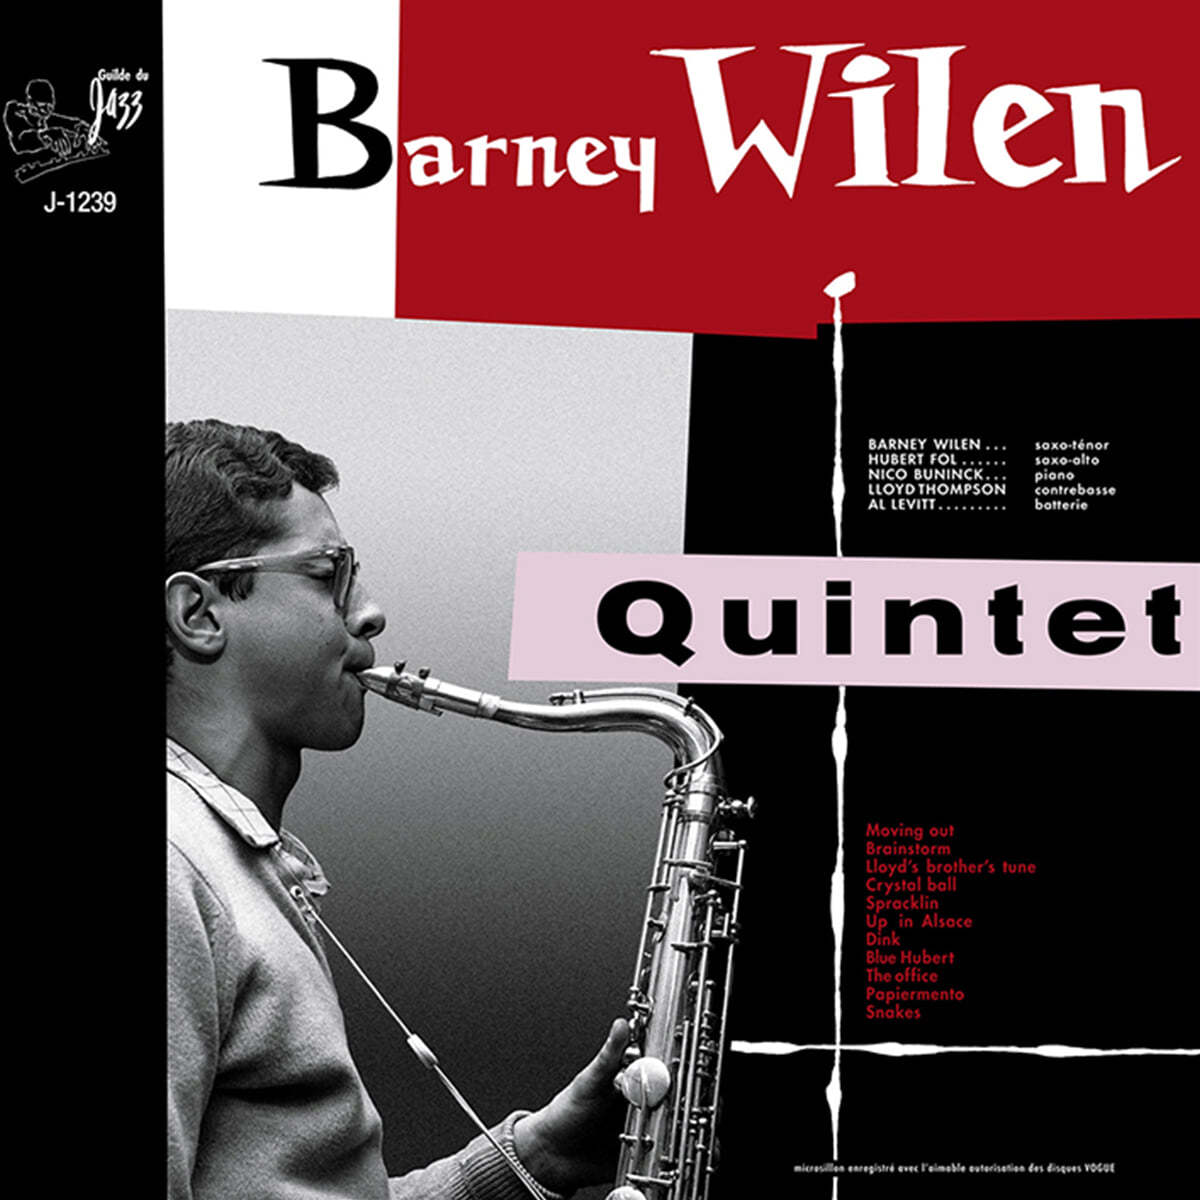 Barney Wilen Quintet (바니 웰렌 퀸텟) - Barney Wilen Quintet [LP]